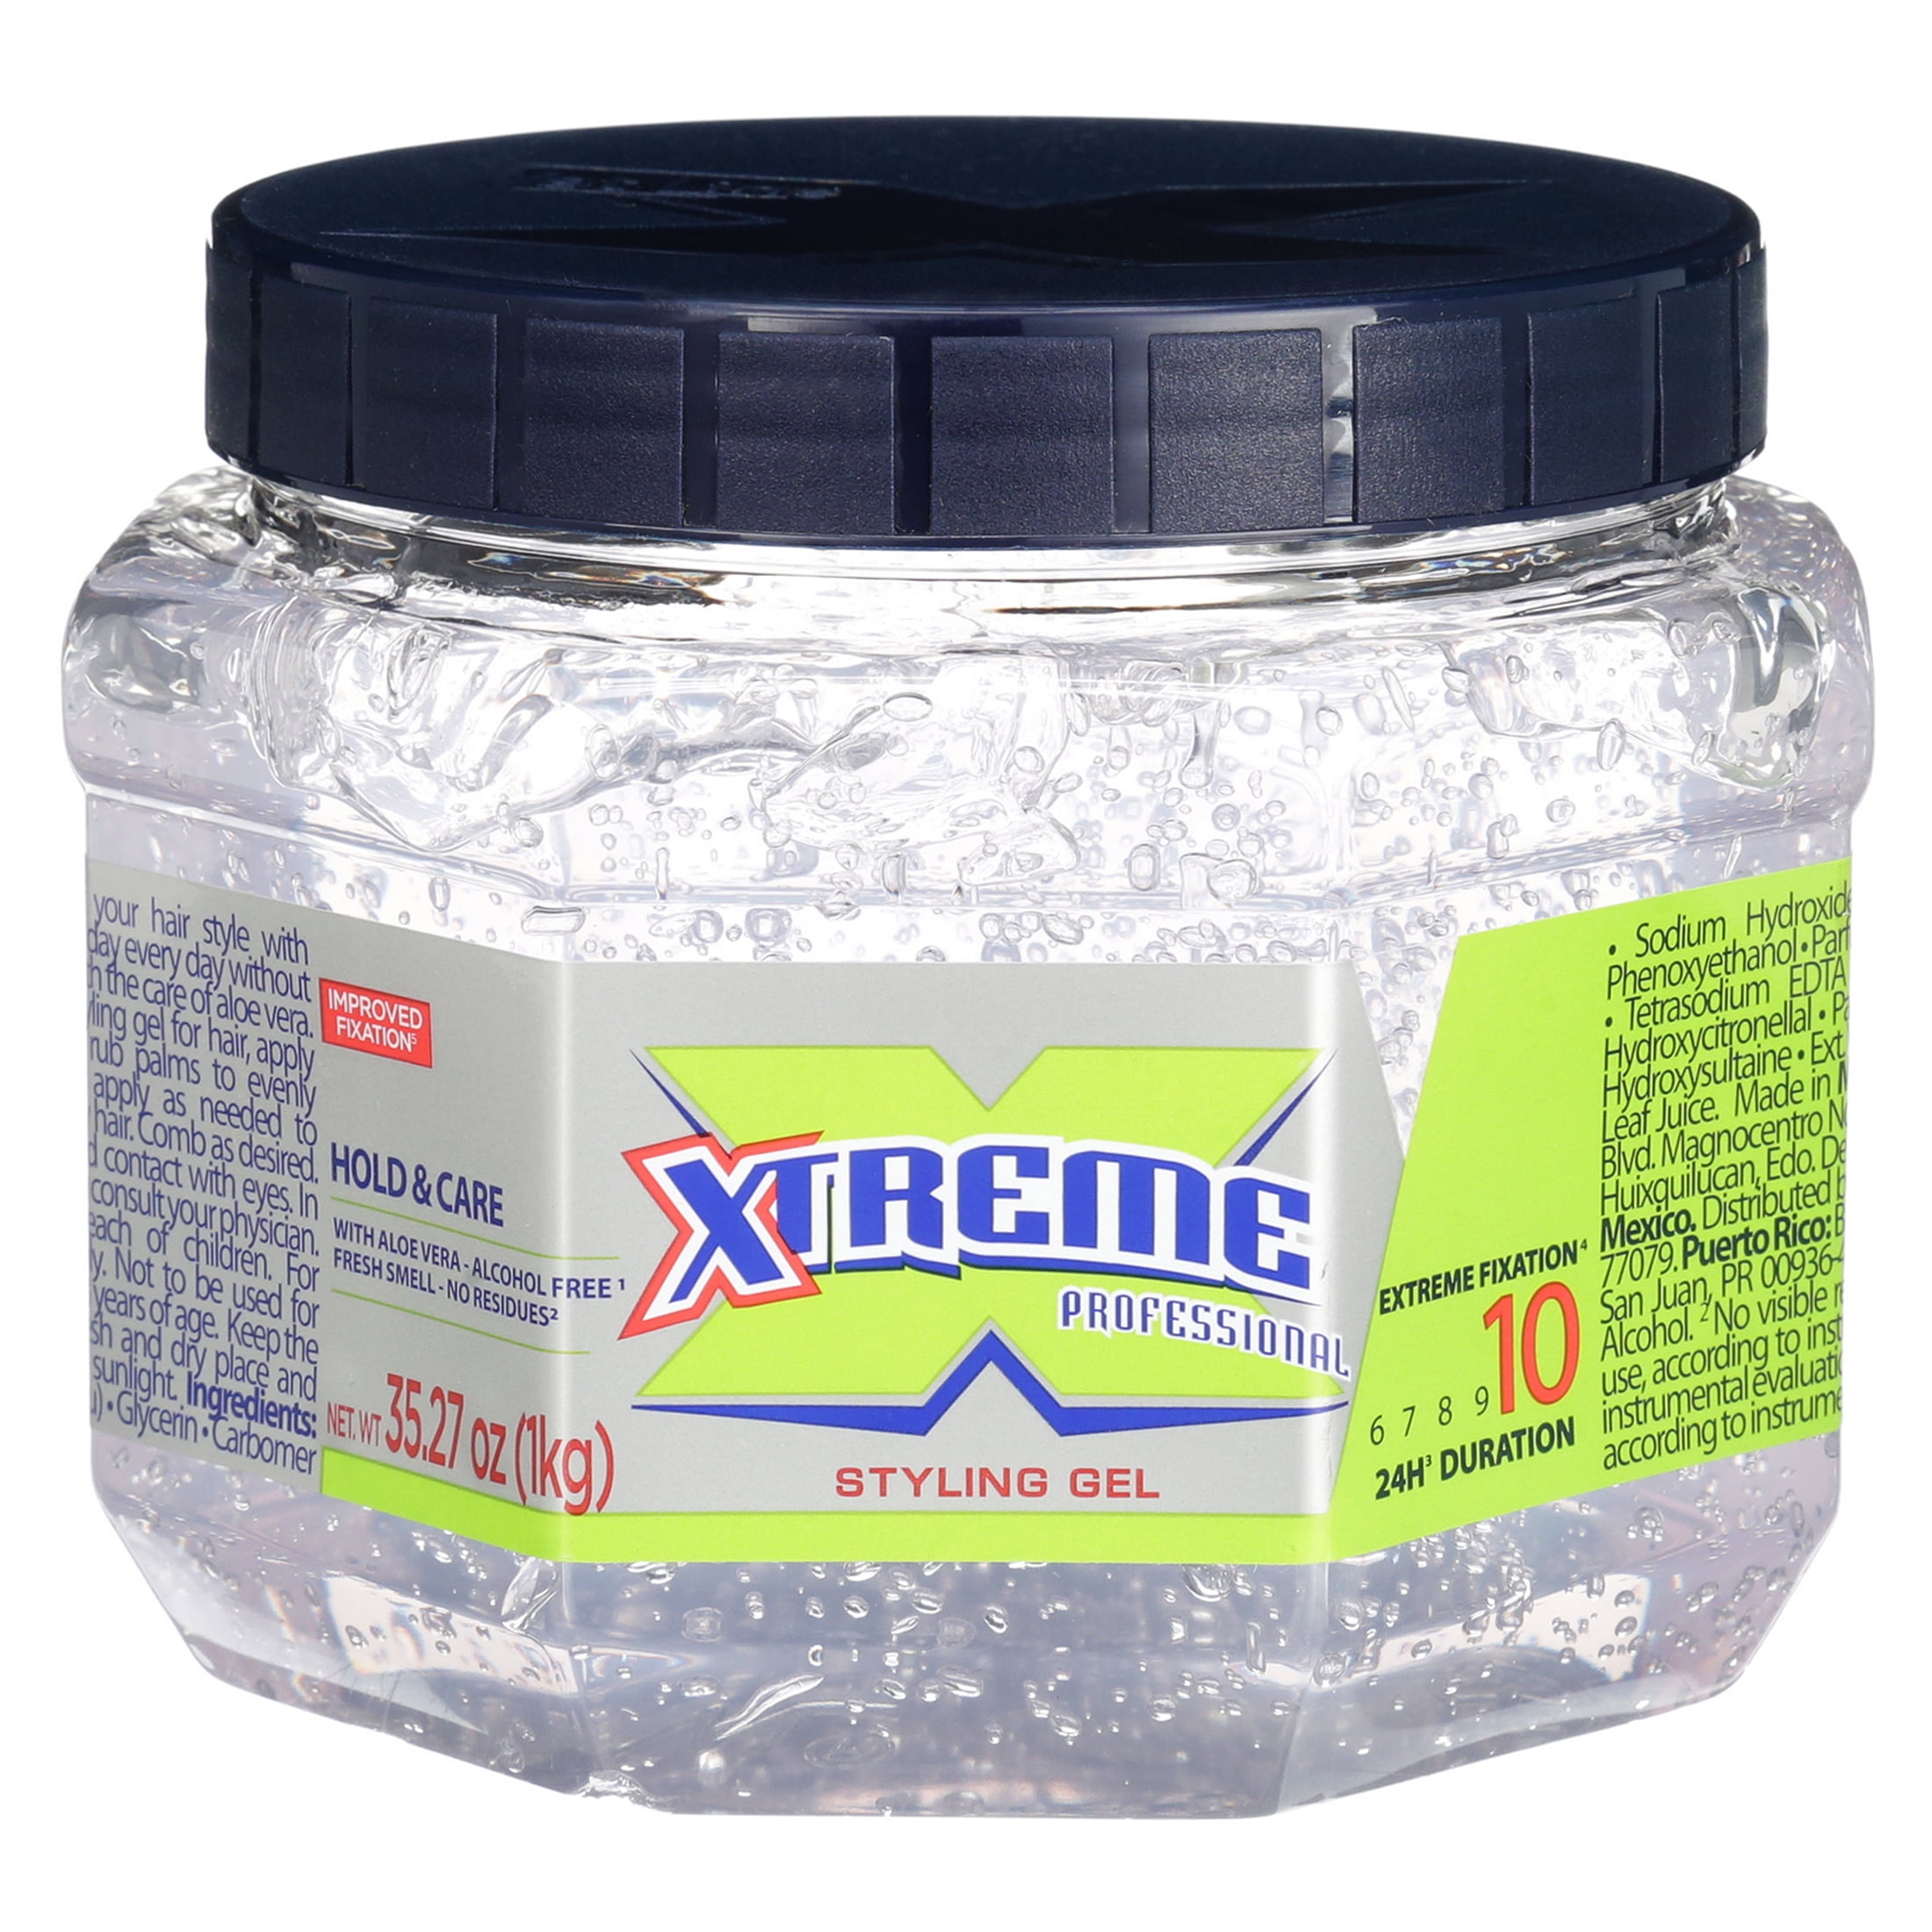 Xtreme Pro-Expert Hair Styling Gel,  oz Jumbo Clear Jar 